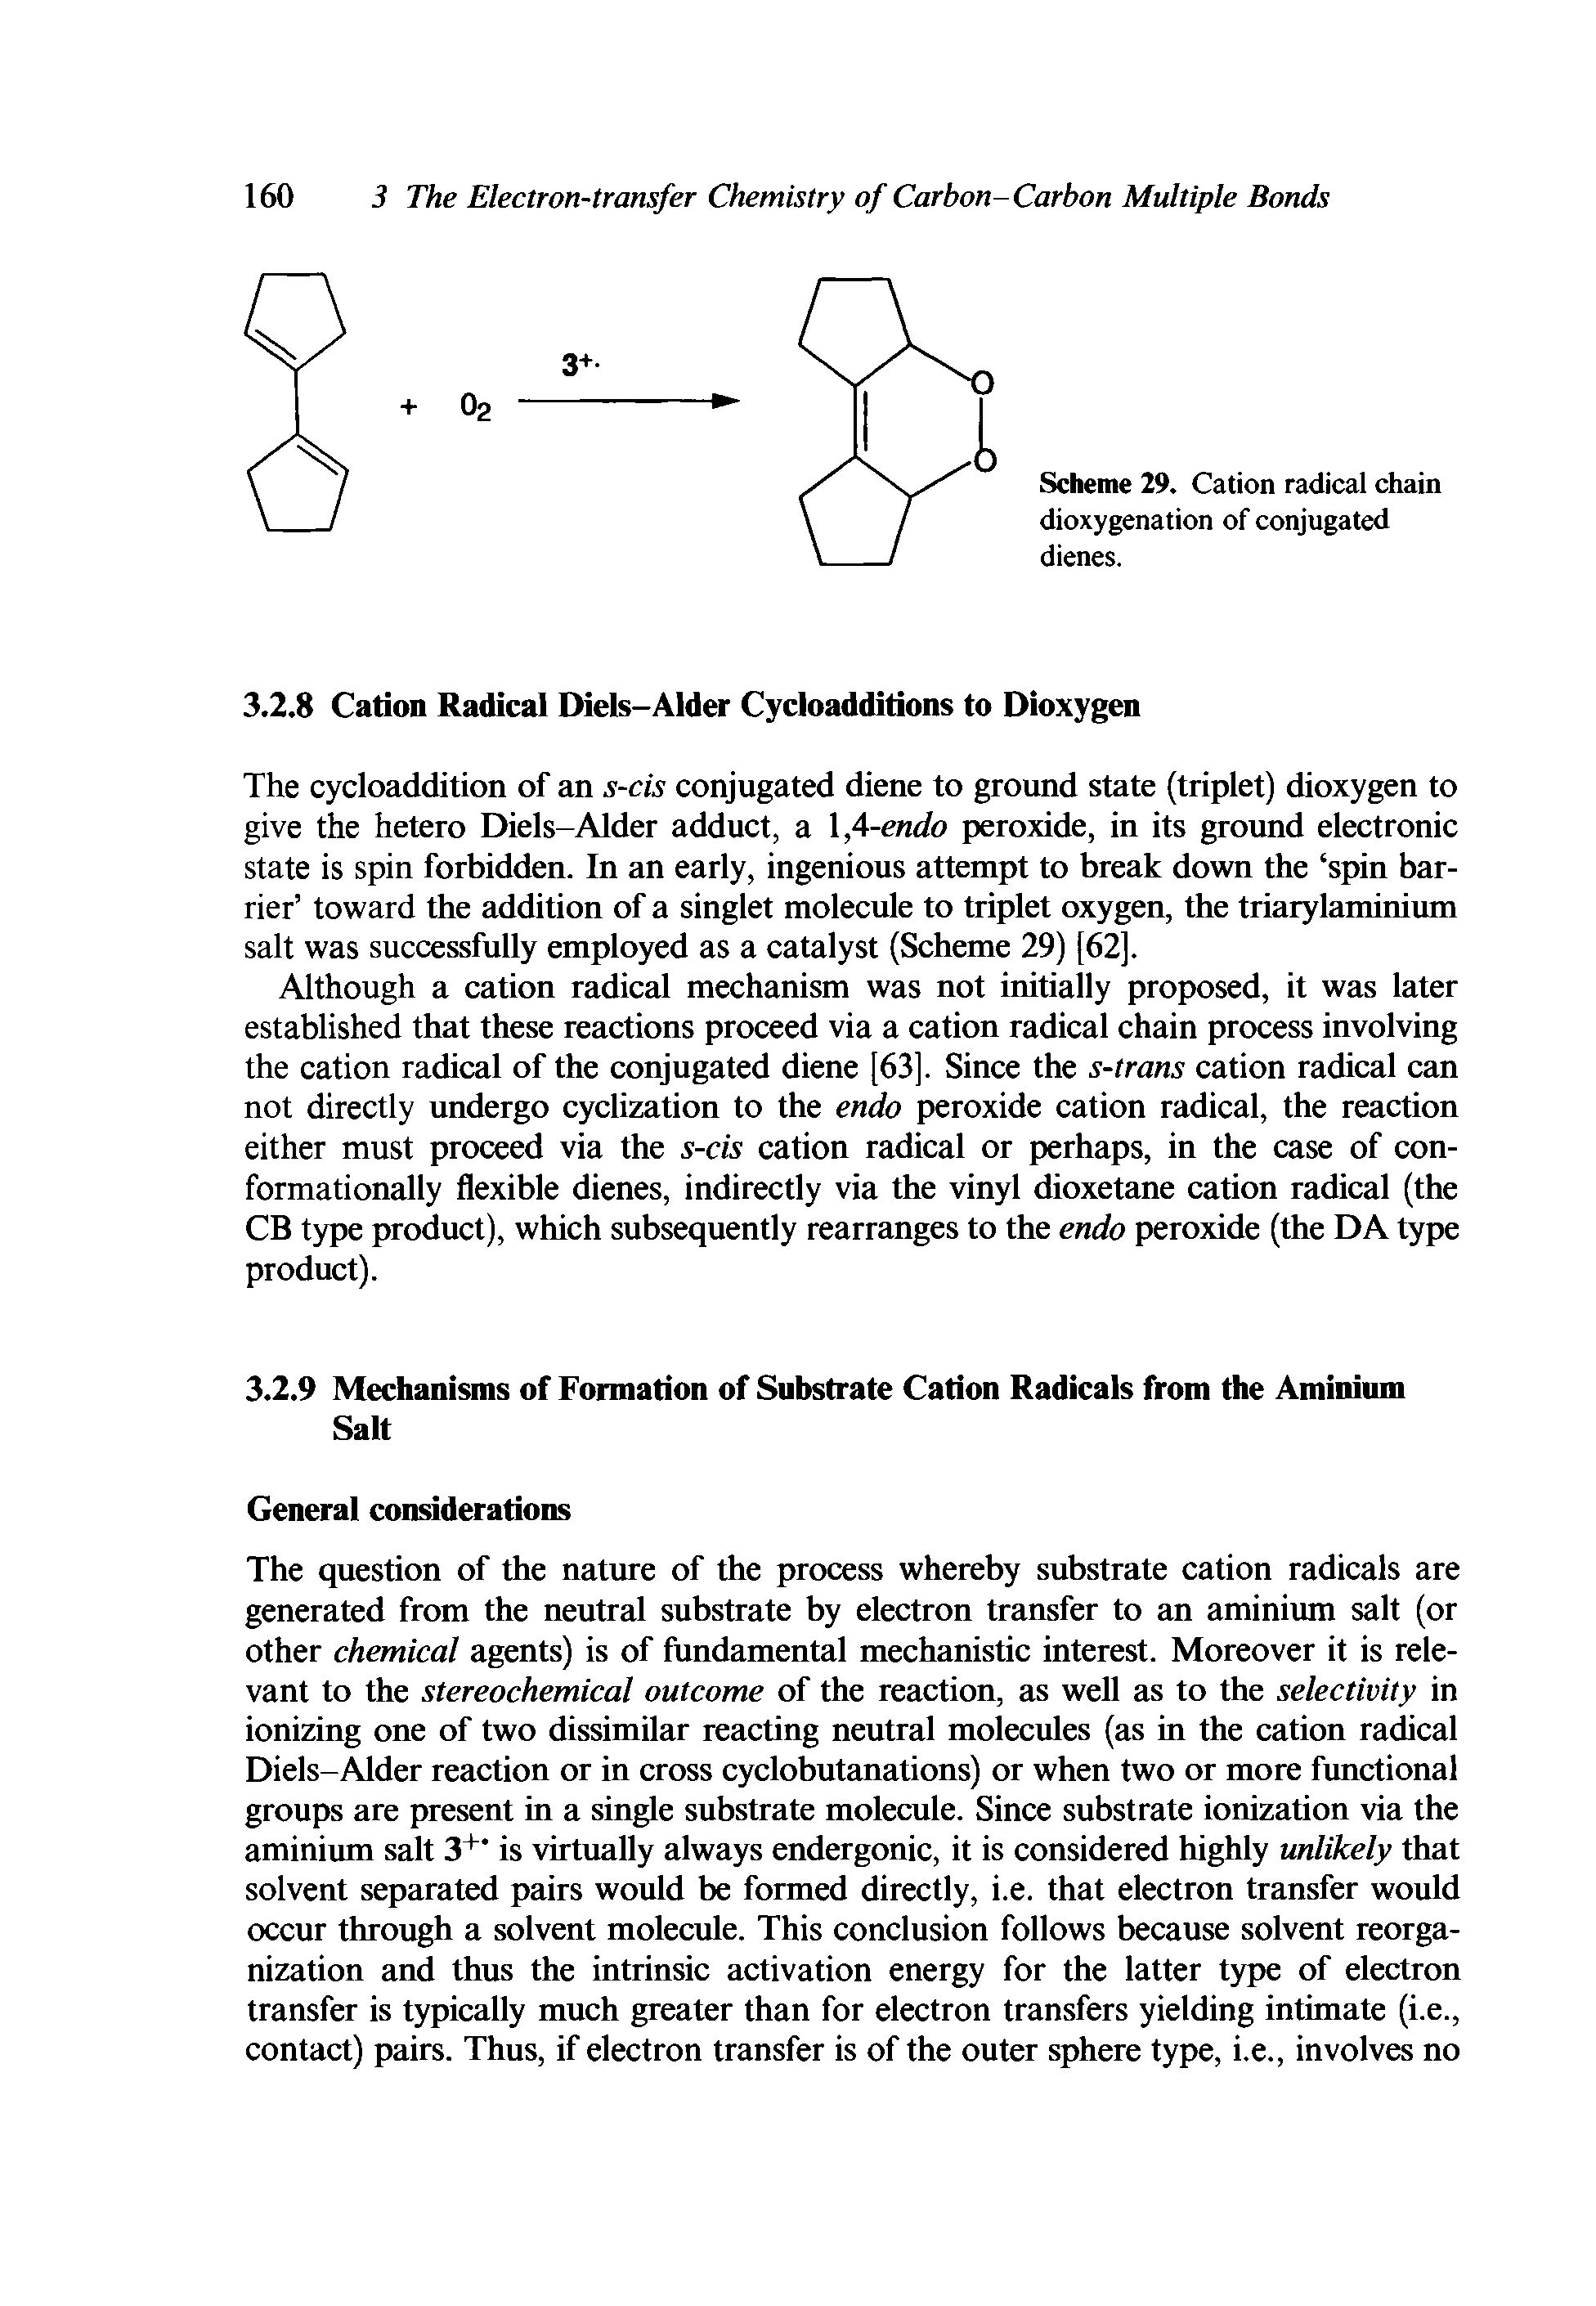 Scheme 29. Cation radical chain dioxygenation of conjugated dienes.